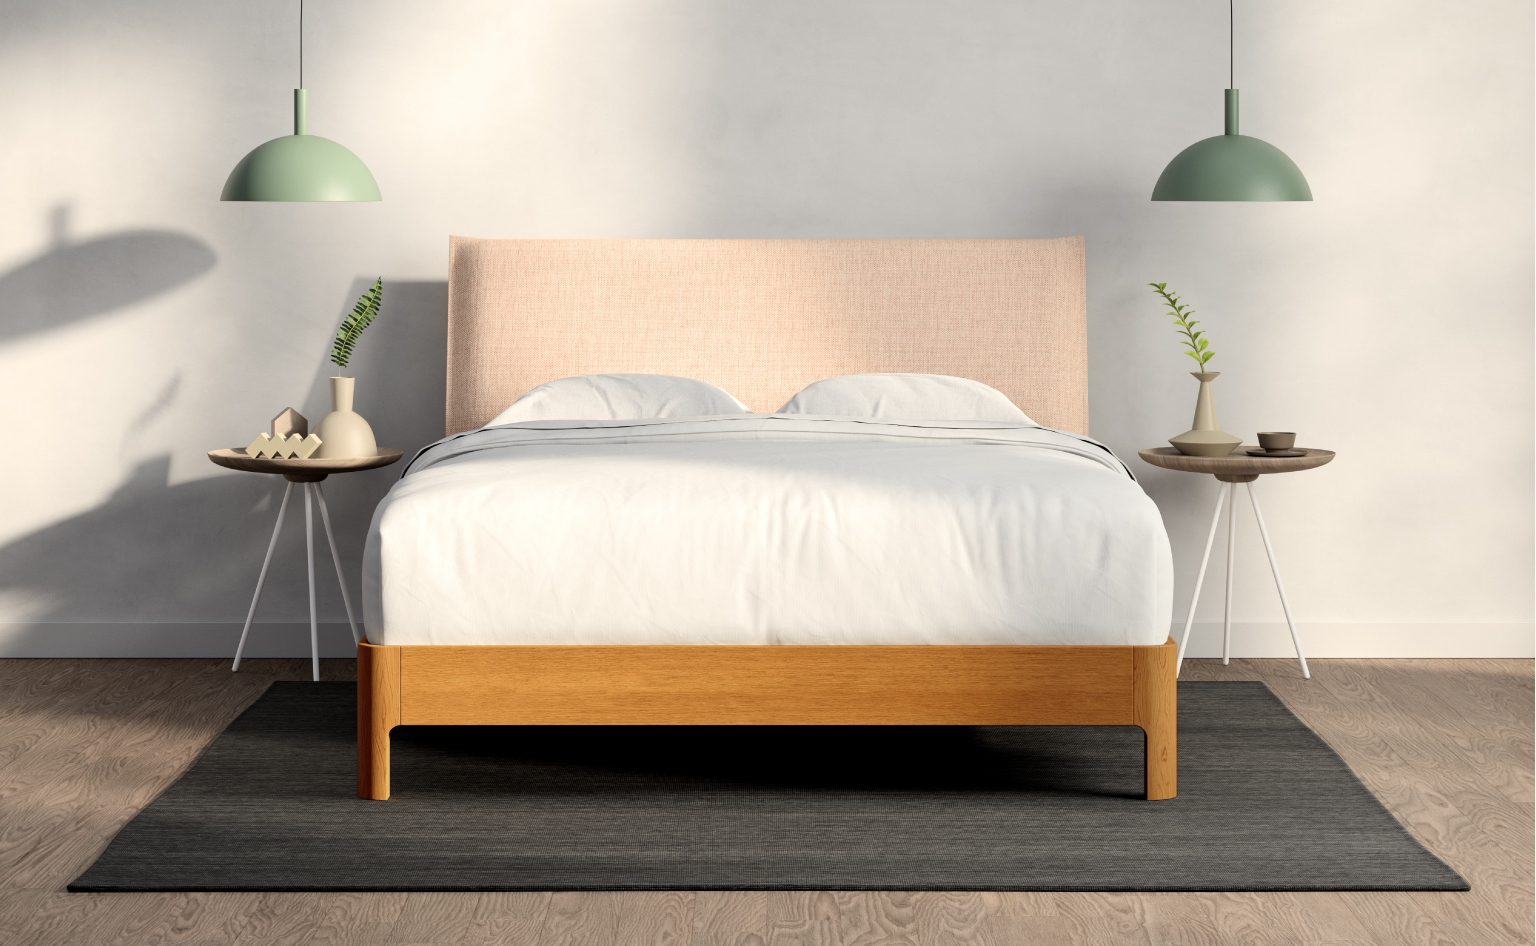 Hot Style 4 Size Wood Metal Platform Bed Frame Bedroom Mattress Foundation NEW 